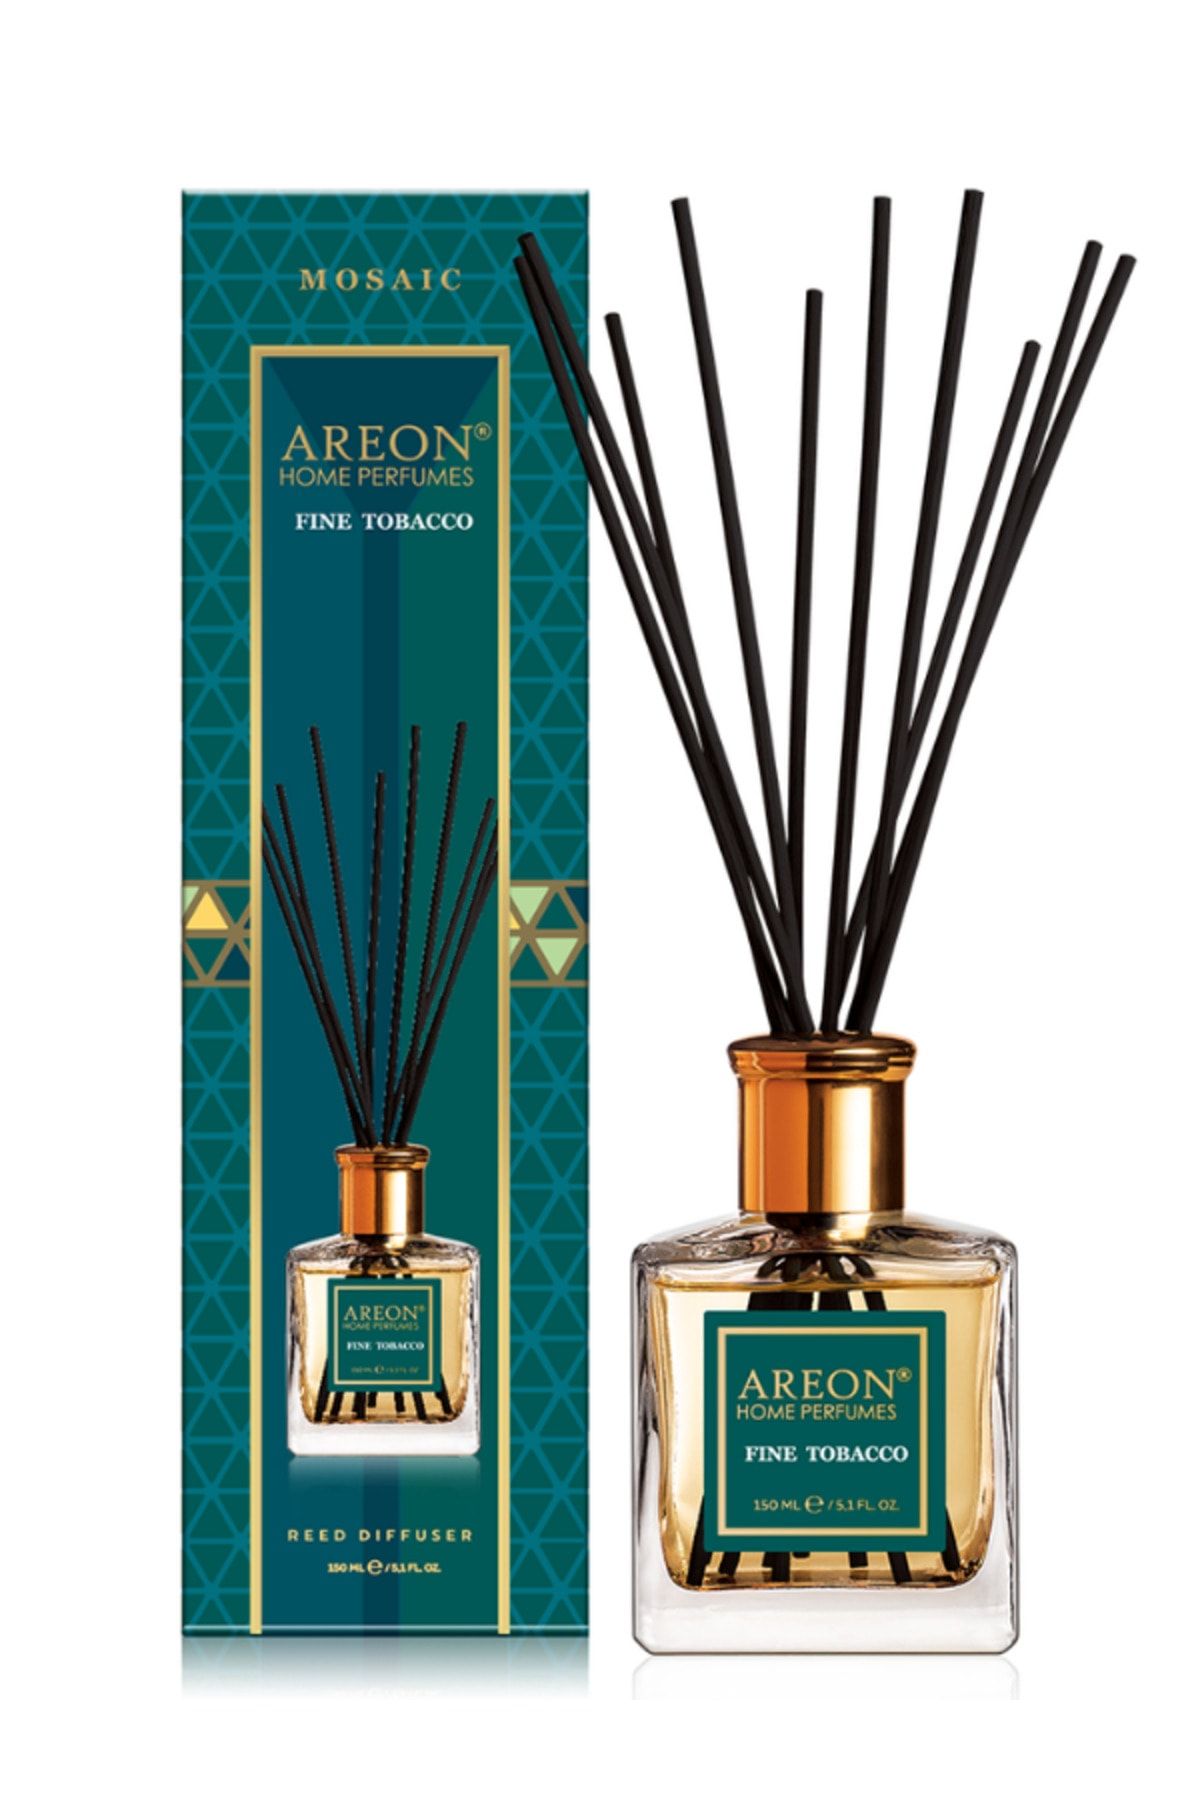 Areon Home Perfume Mosaıc Fıne Tobacco 'kaliteli Oda Kokusu' 150ml